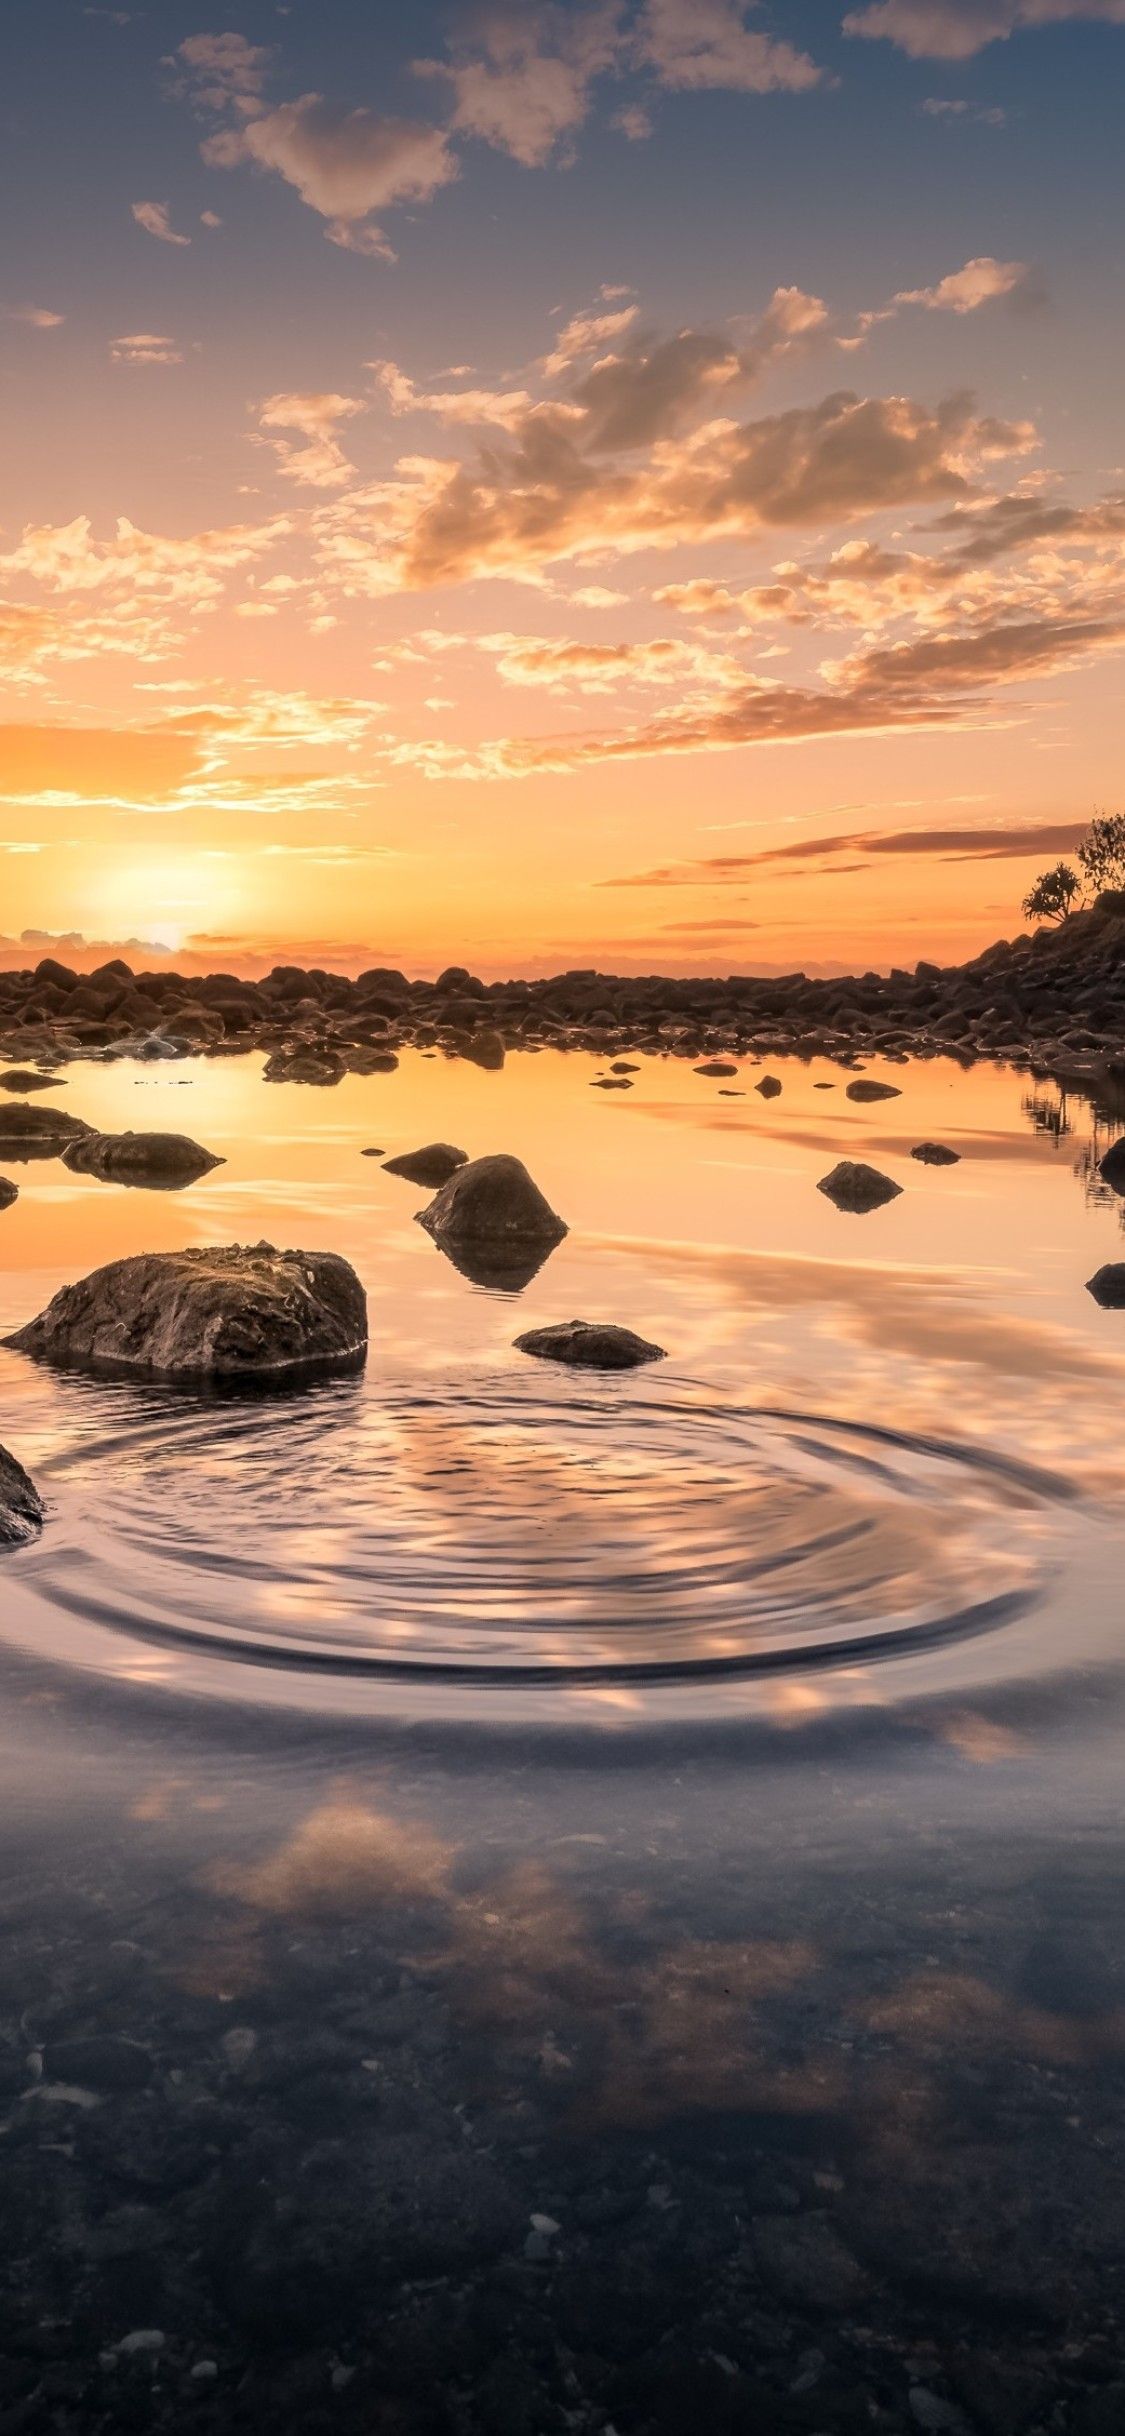 Sky Scenic Landscape Water Reflection Rocks iPhone XS